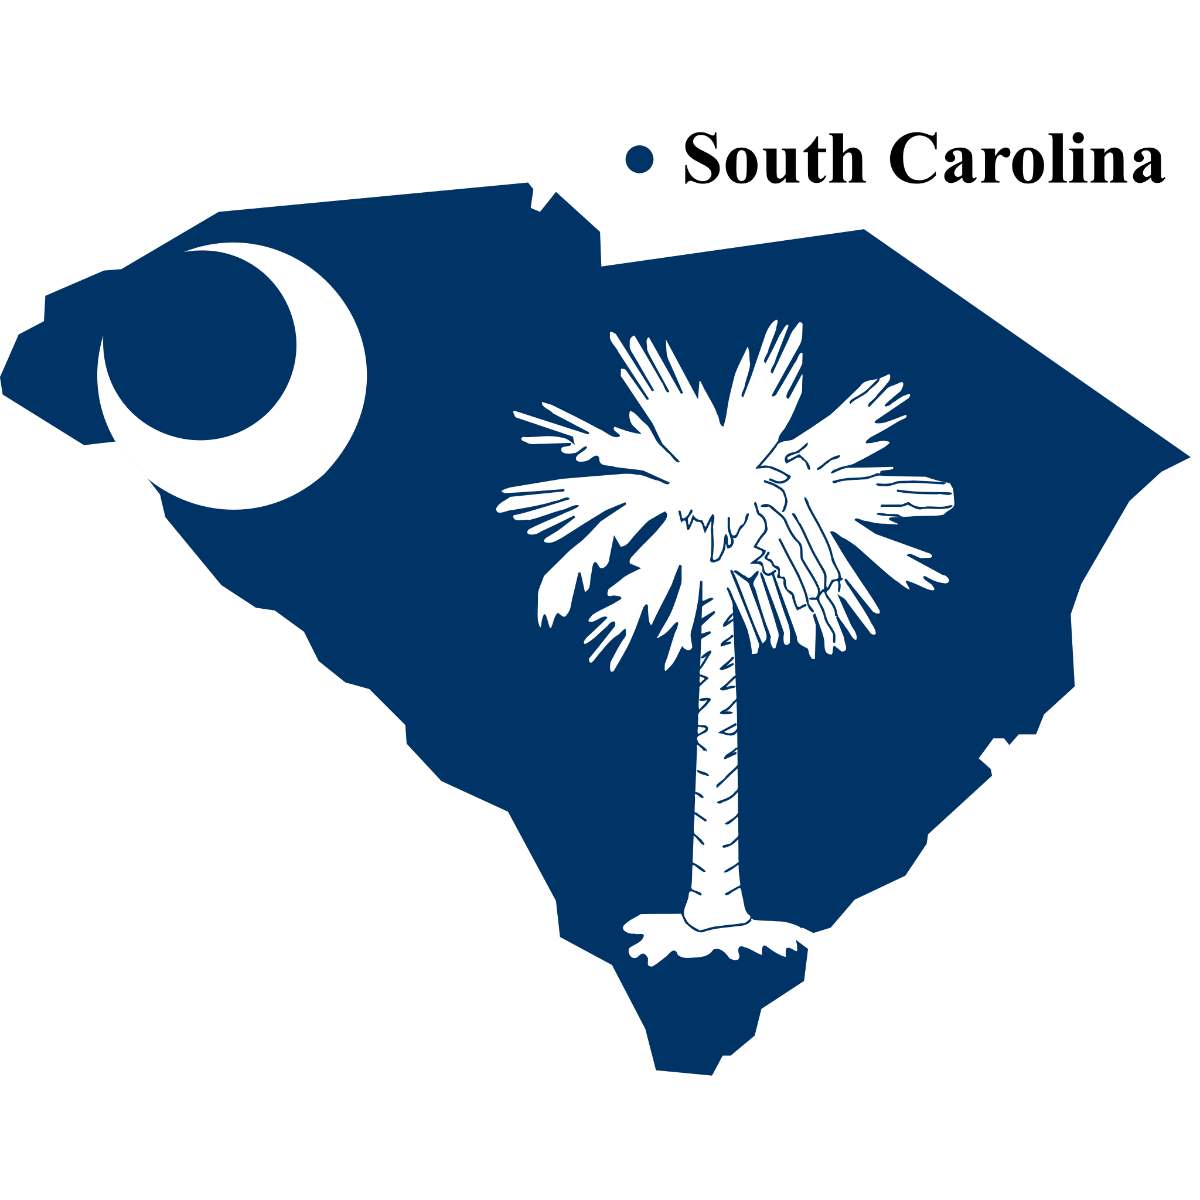 South Carolina State map cutout with South Carolina flag superimposed